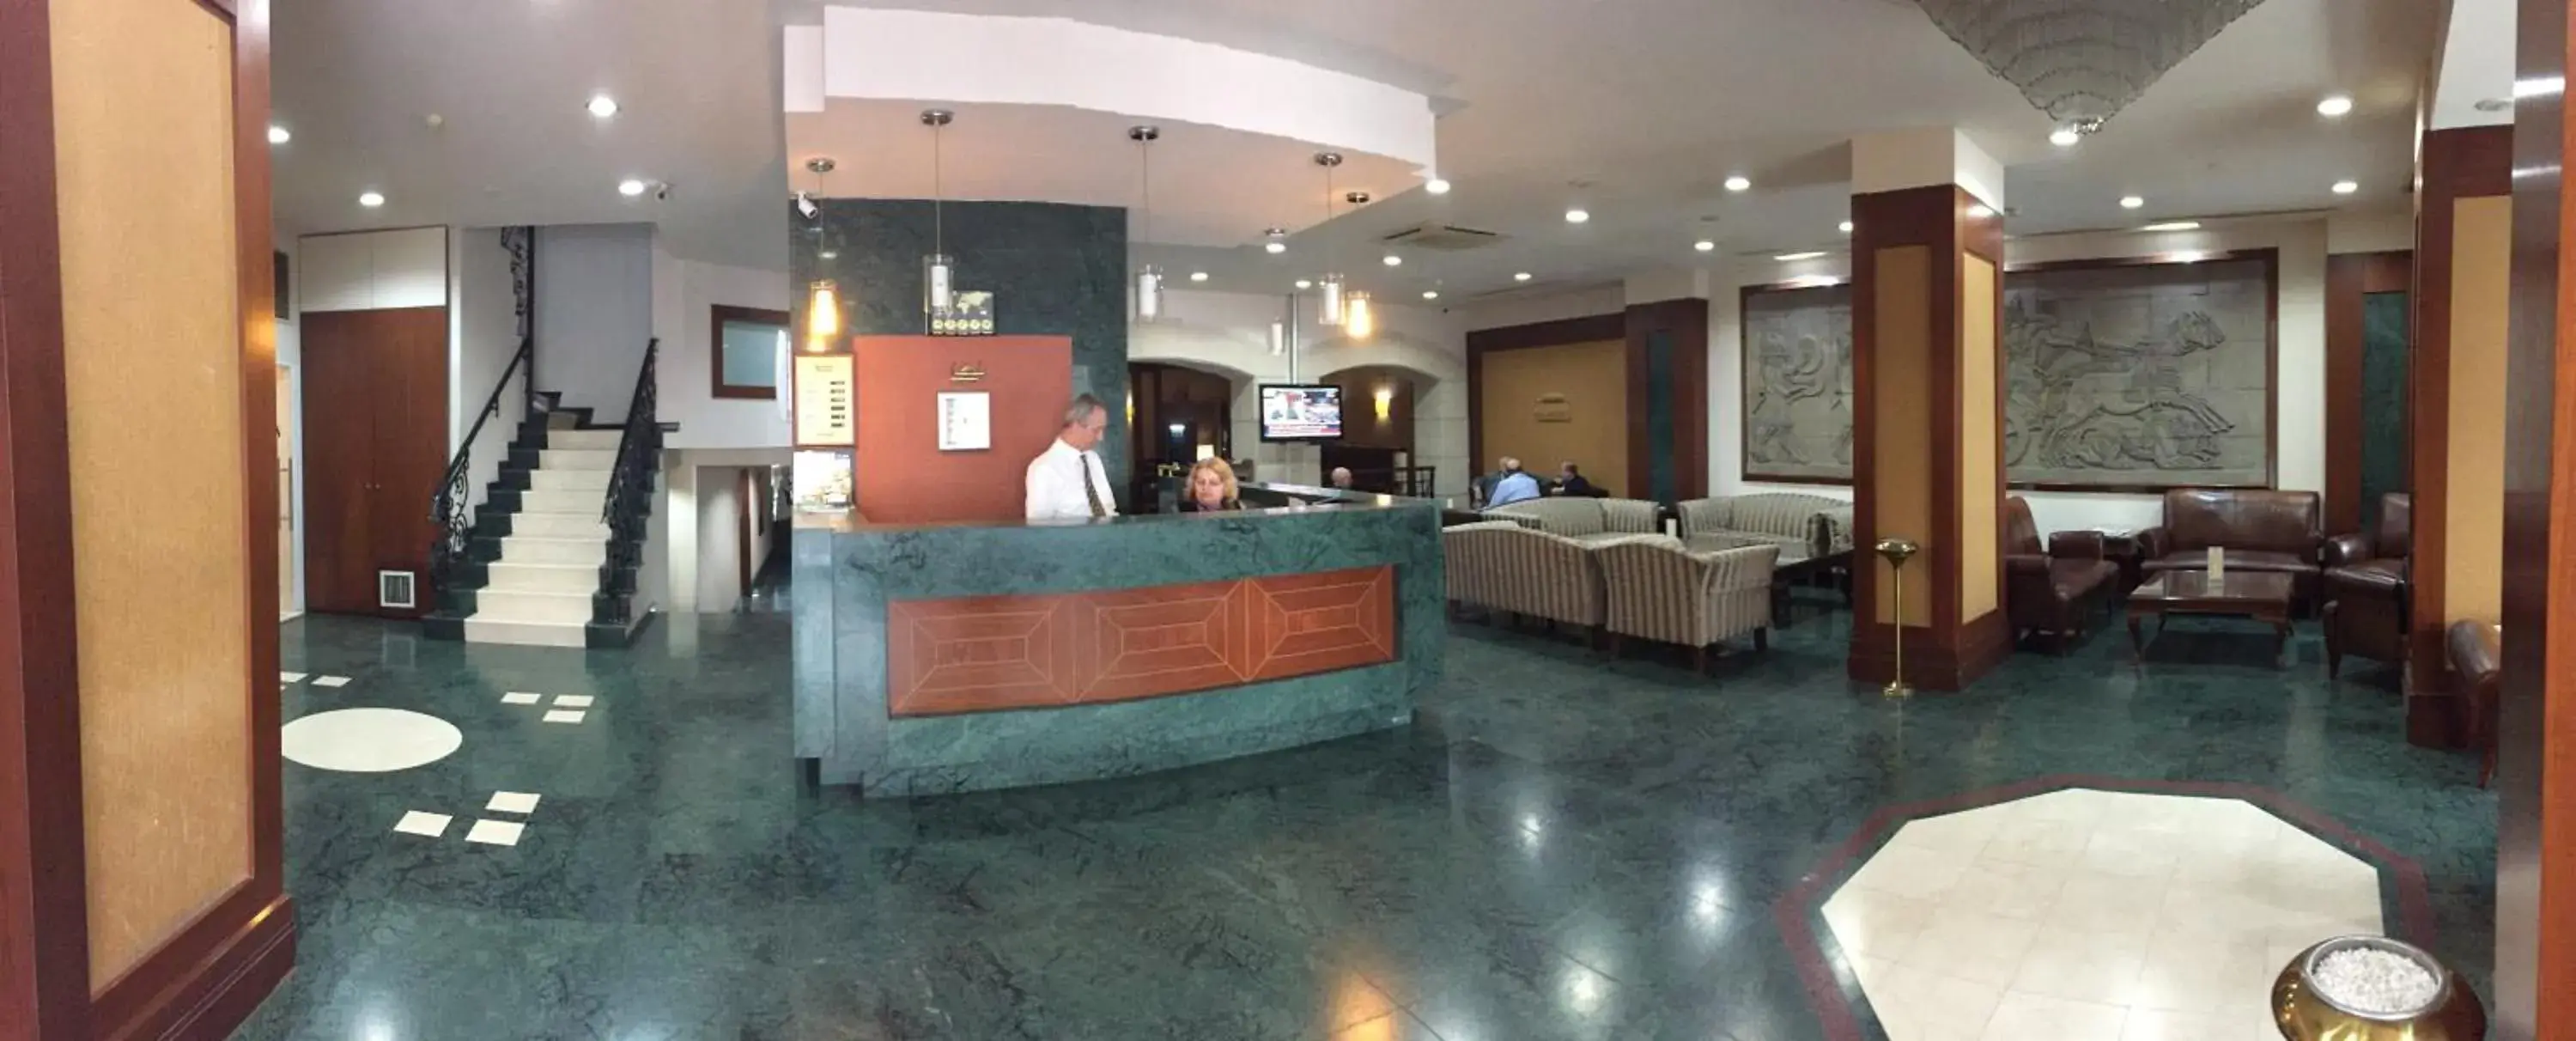 Lobby or reception in Benler Hotel